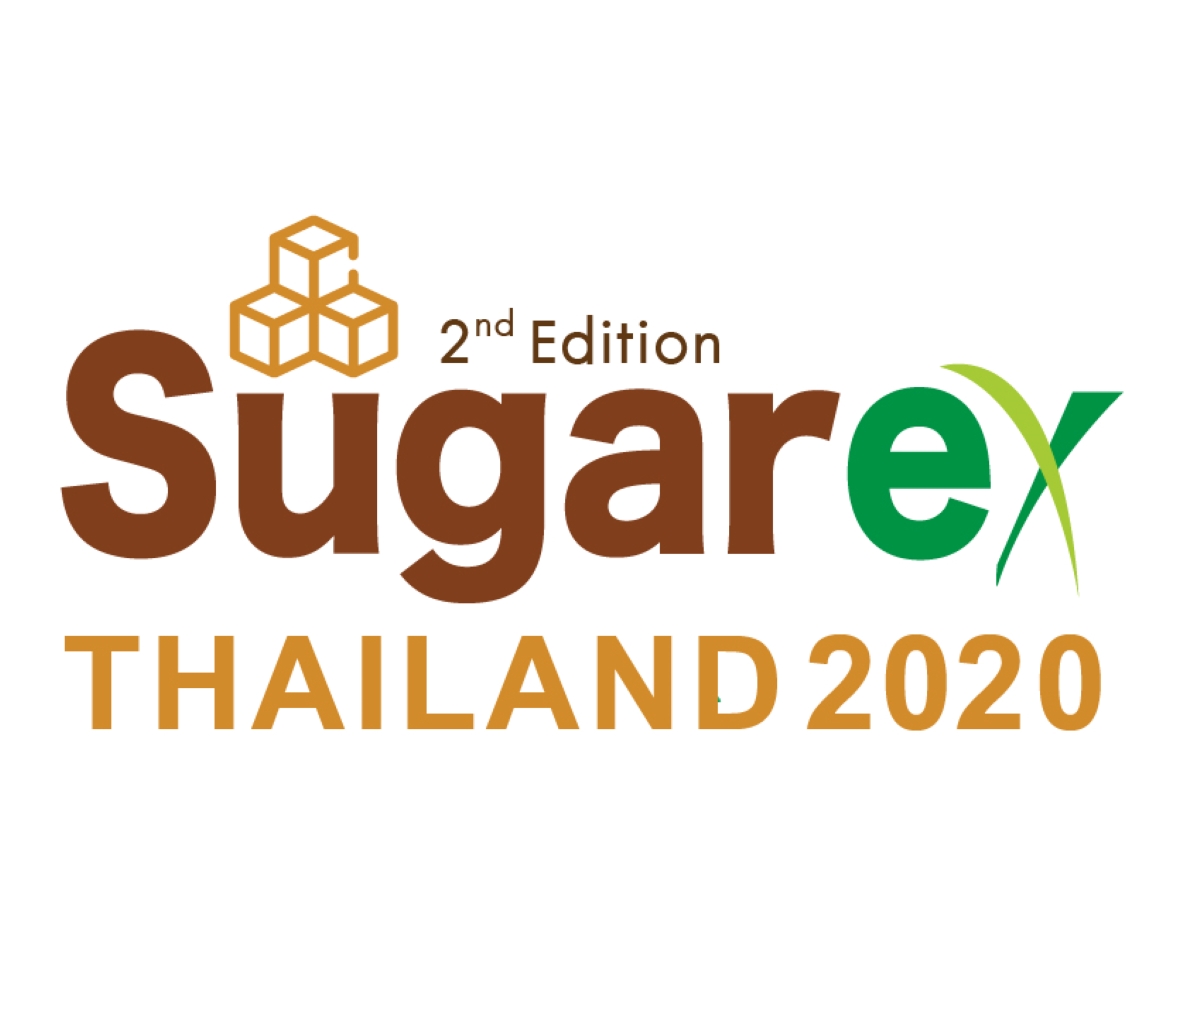 Booth Visit Invitation: Sugarex Thailand 2020